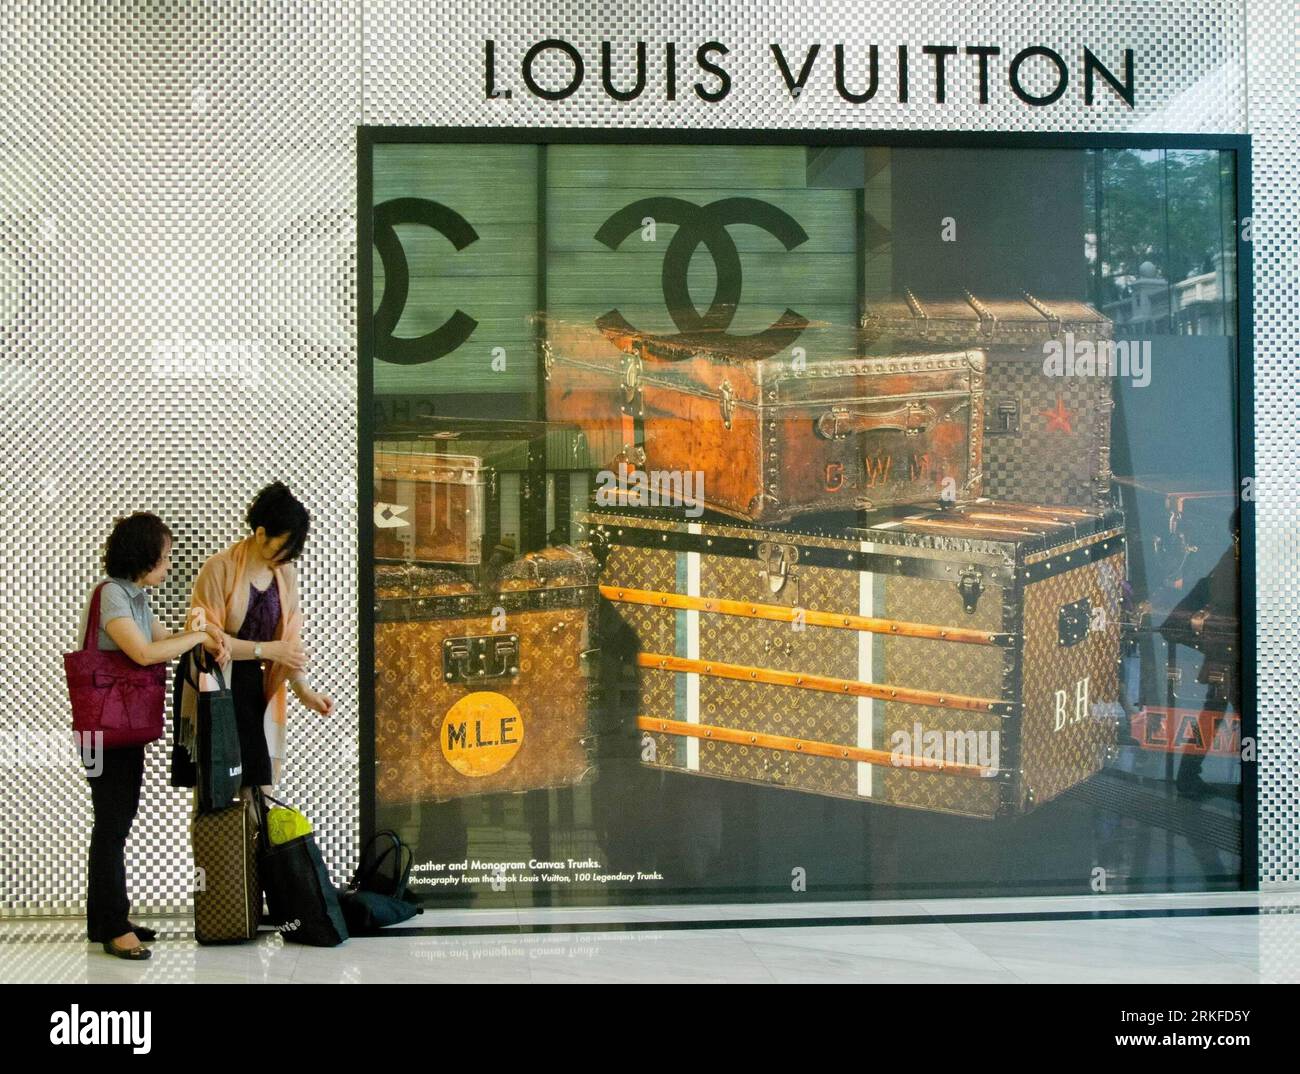 Louis Vuitton Outlet Store In Las Vegas Nevada Near